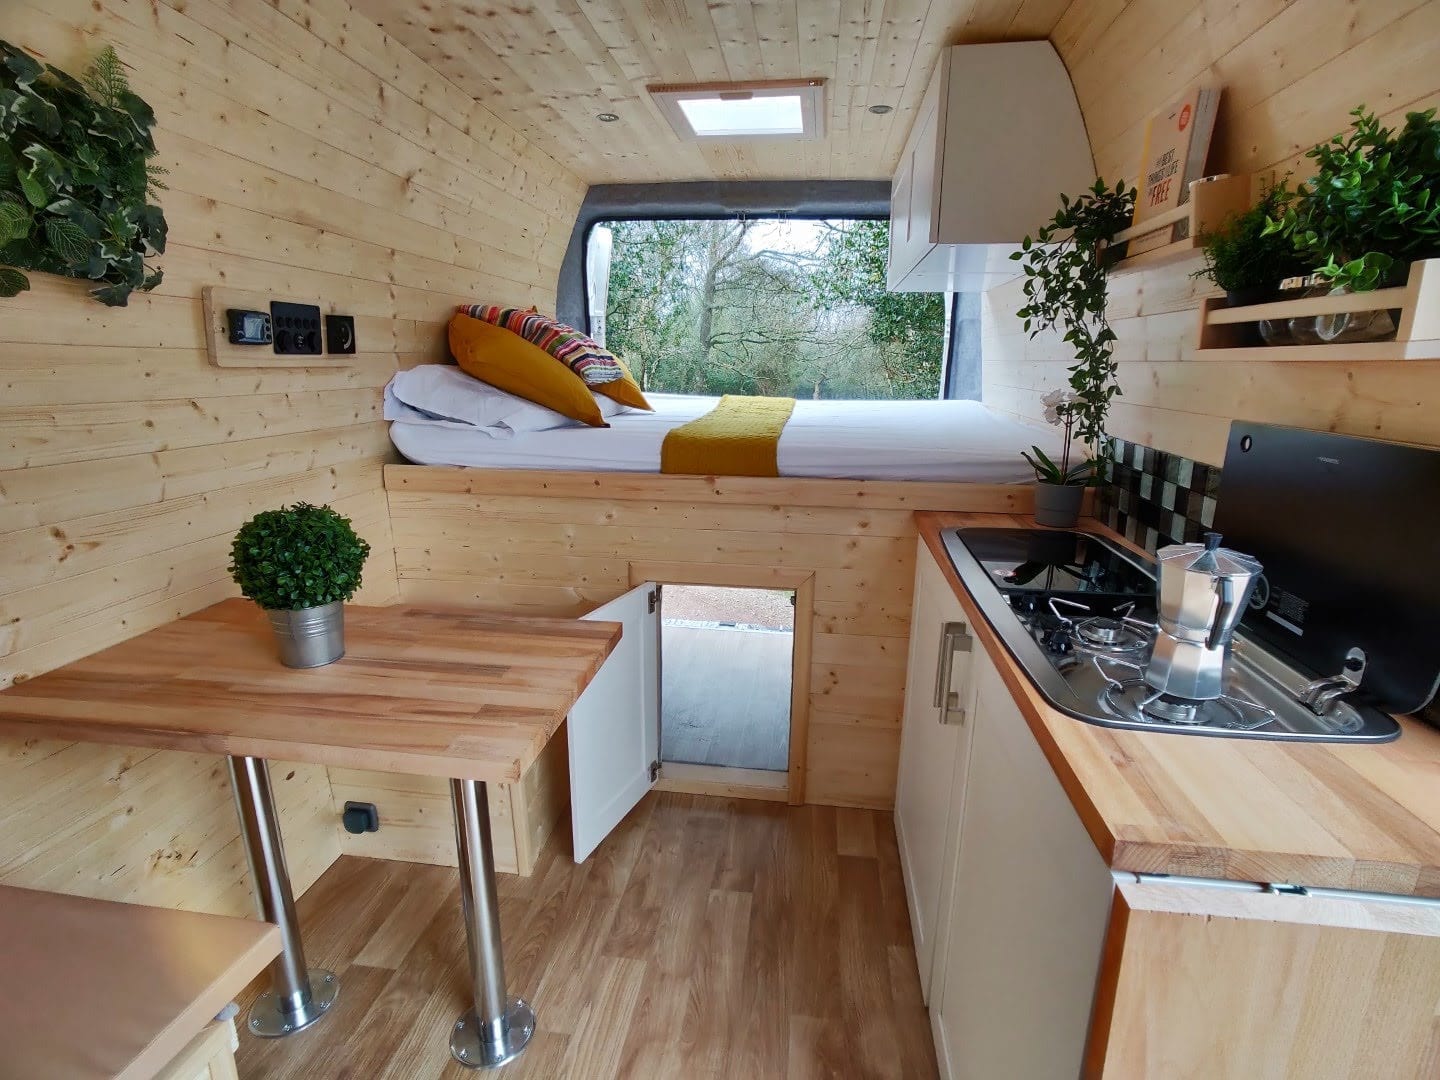 Campervan Hire UK ⋆ Quirky Campers ⋆ Home of Handmade Campervans